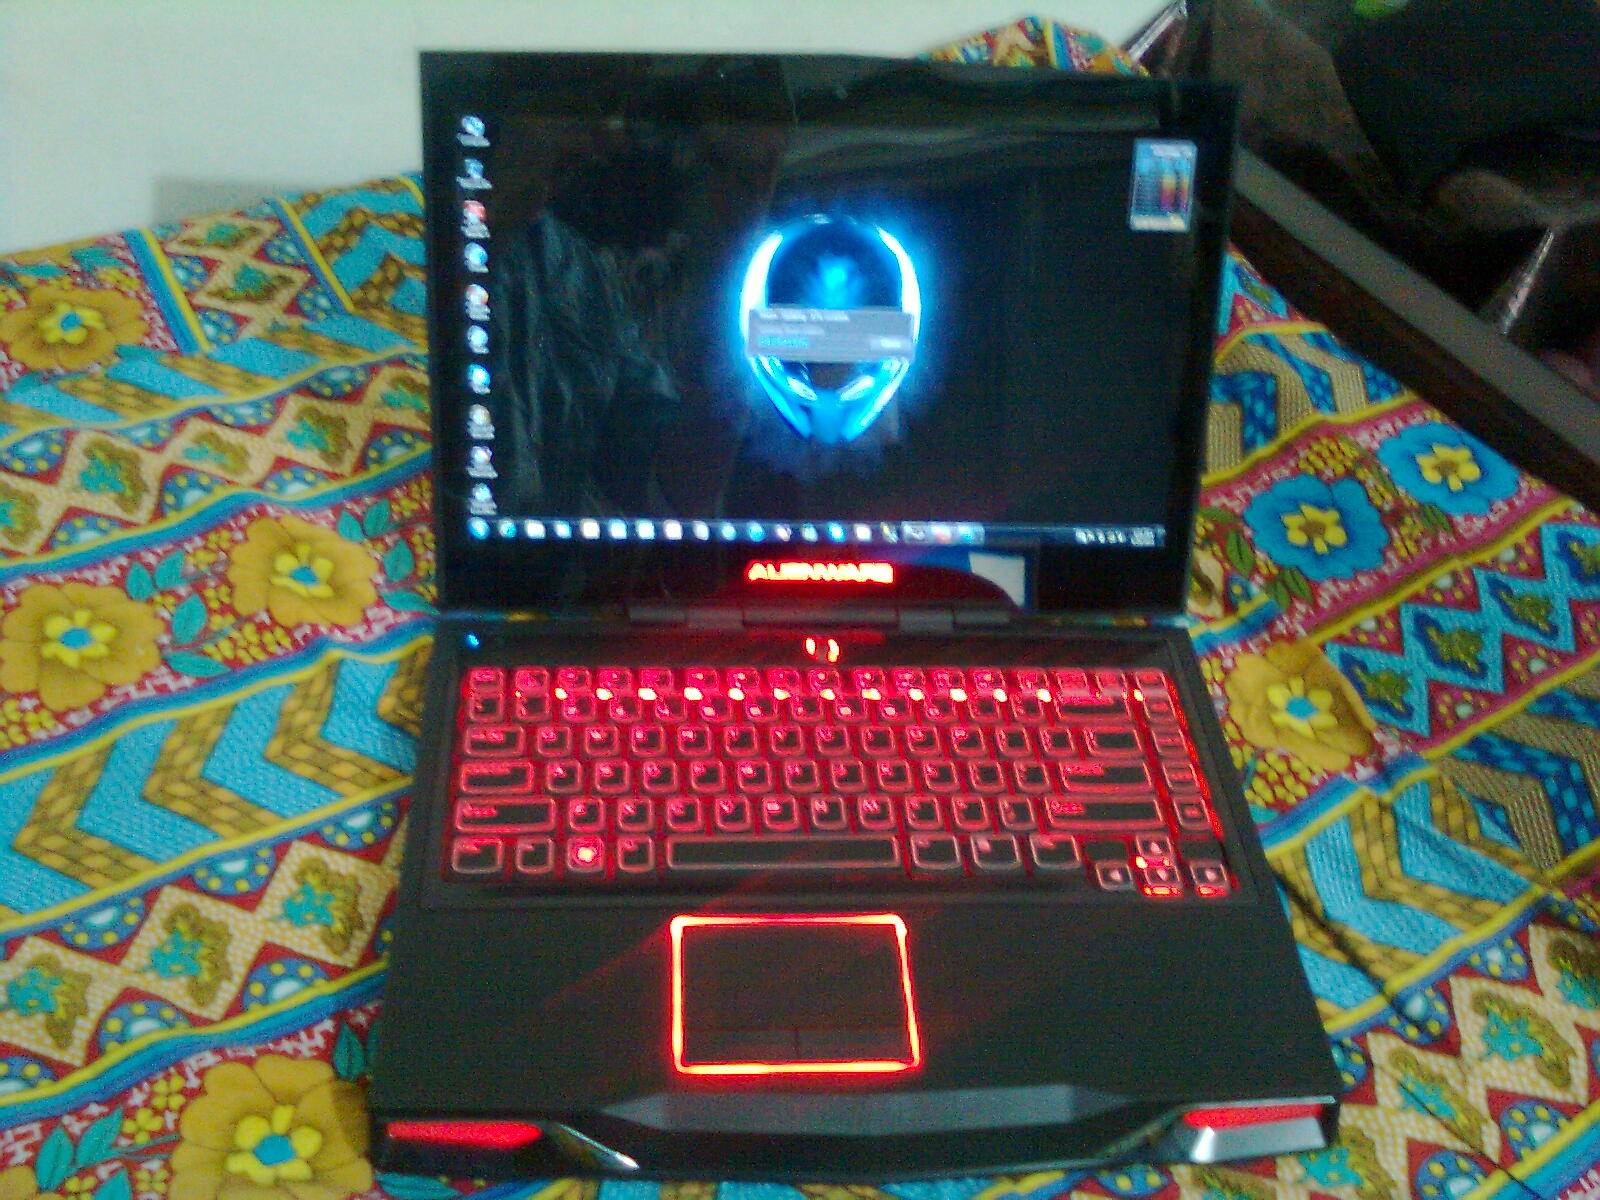 My Laptop ( Alienware m14x )